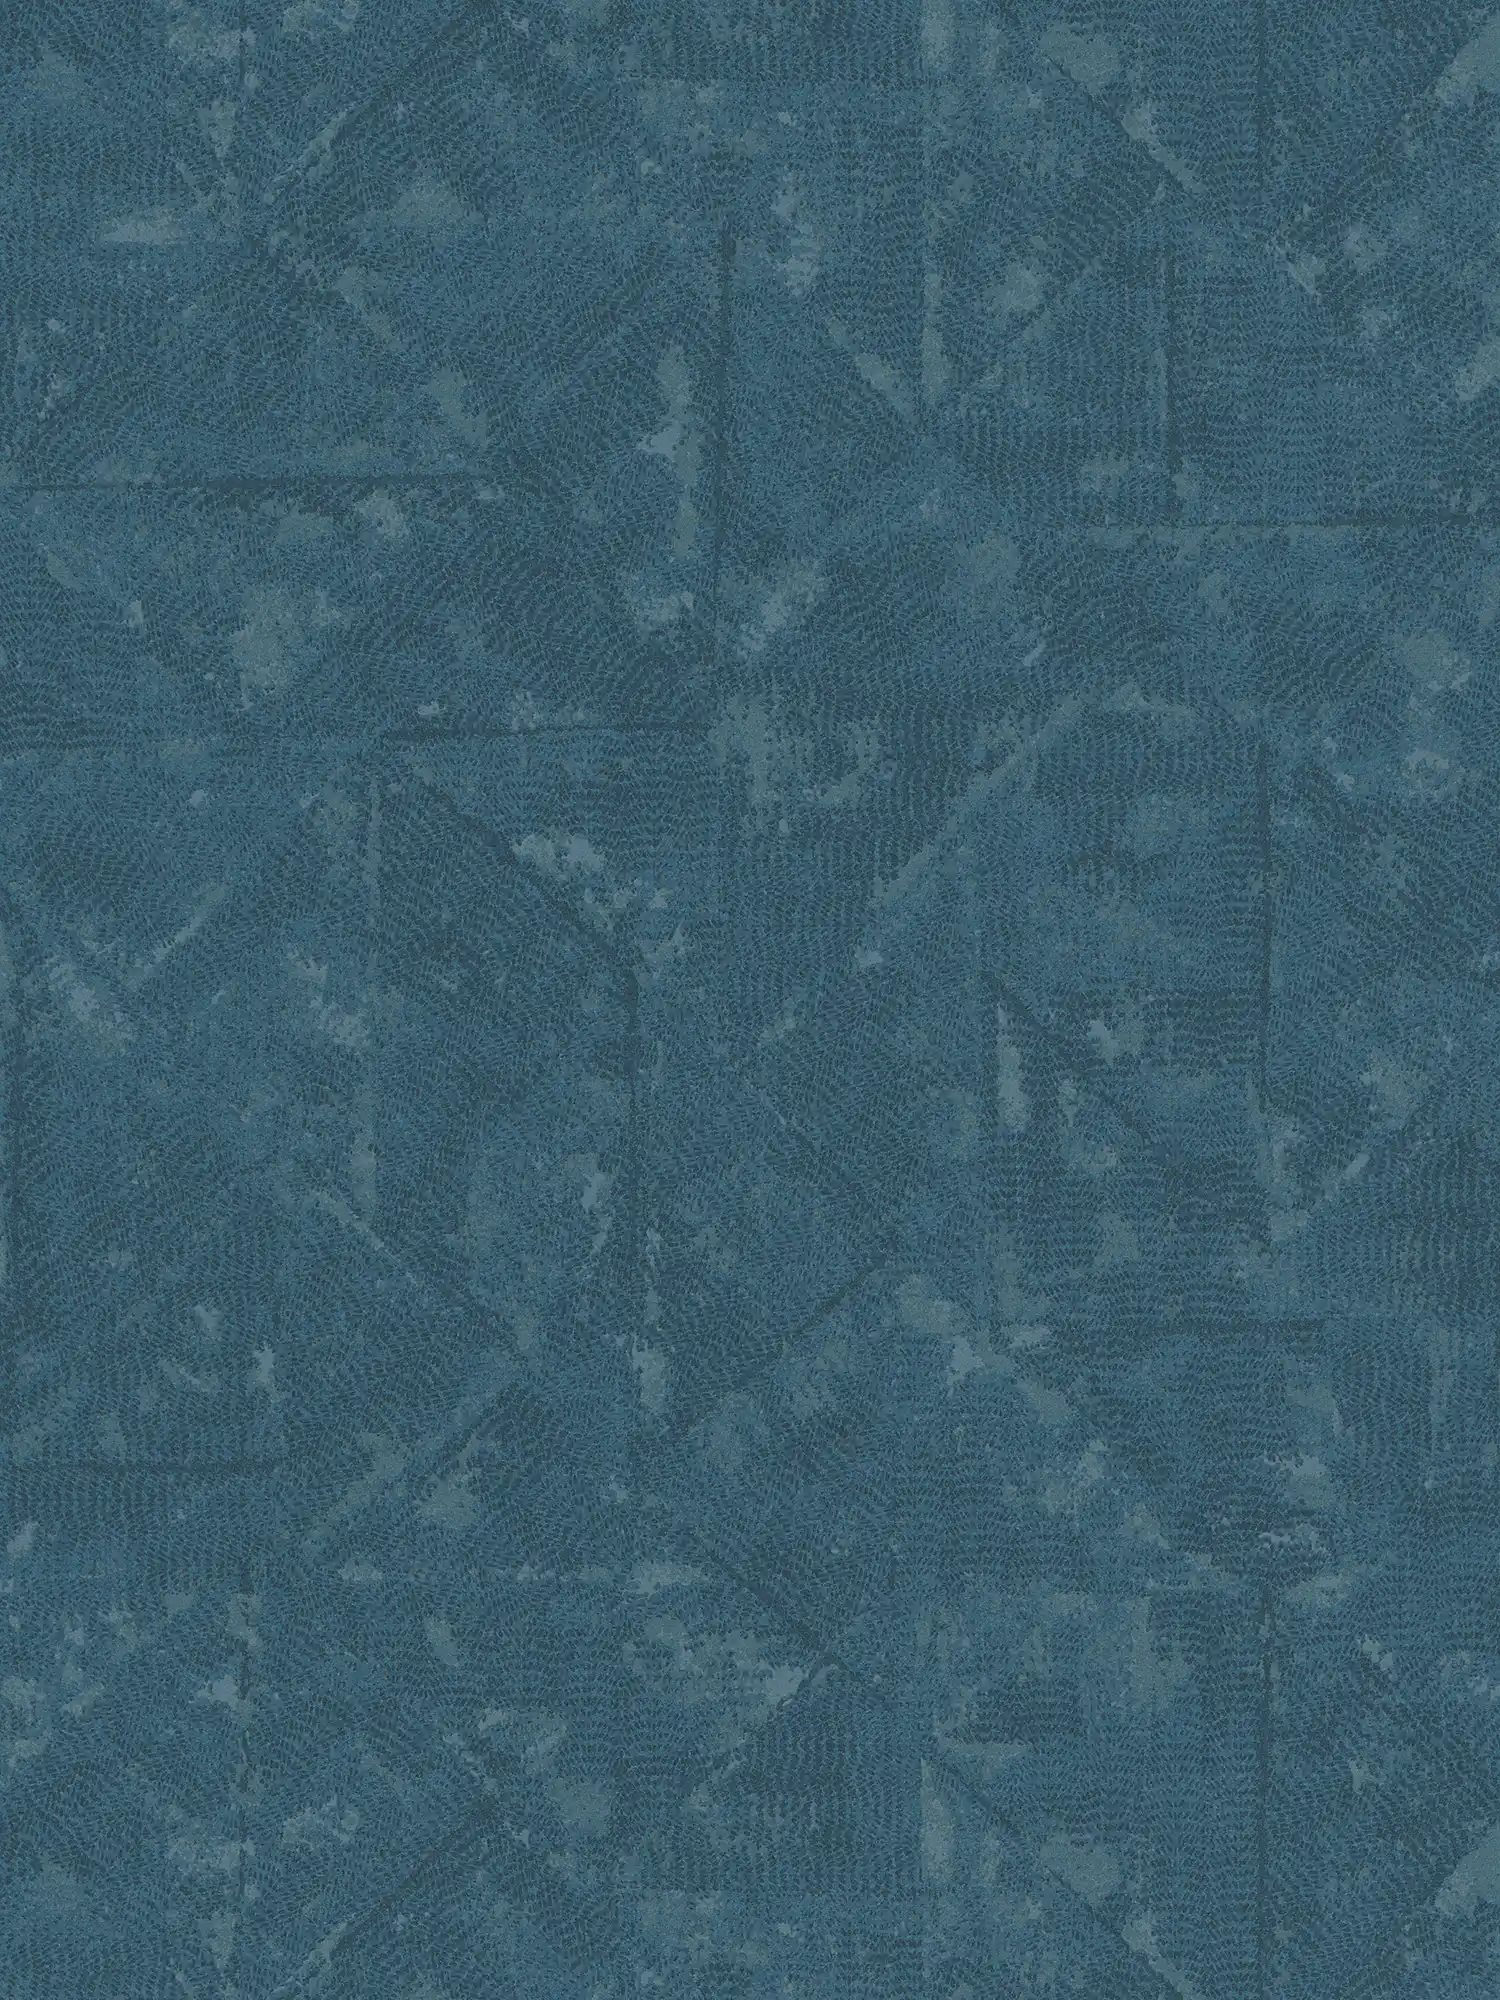 Papel pintado no tejido Petrol con detalles asimétricos - azul, gris
